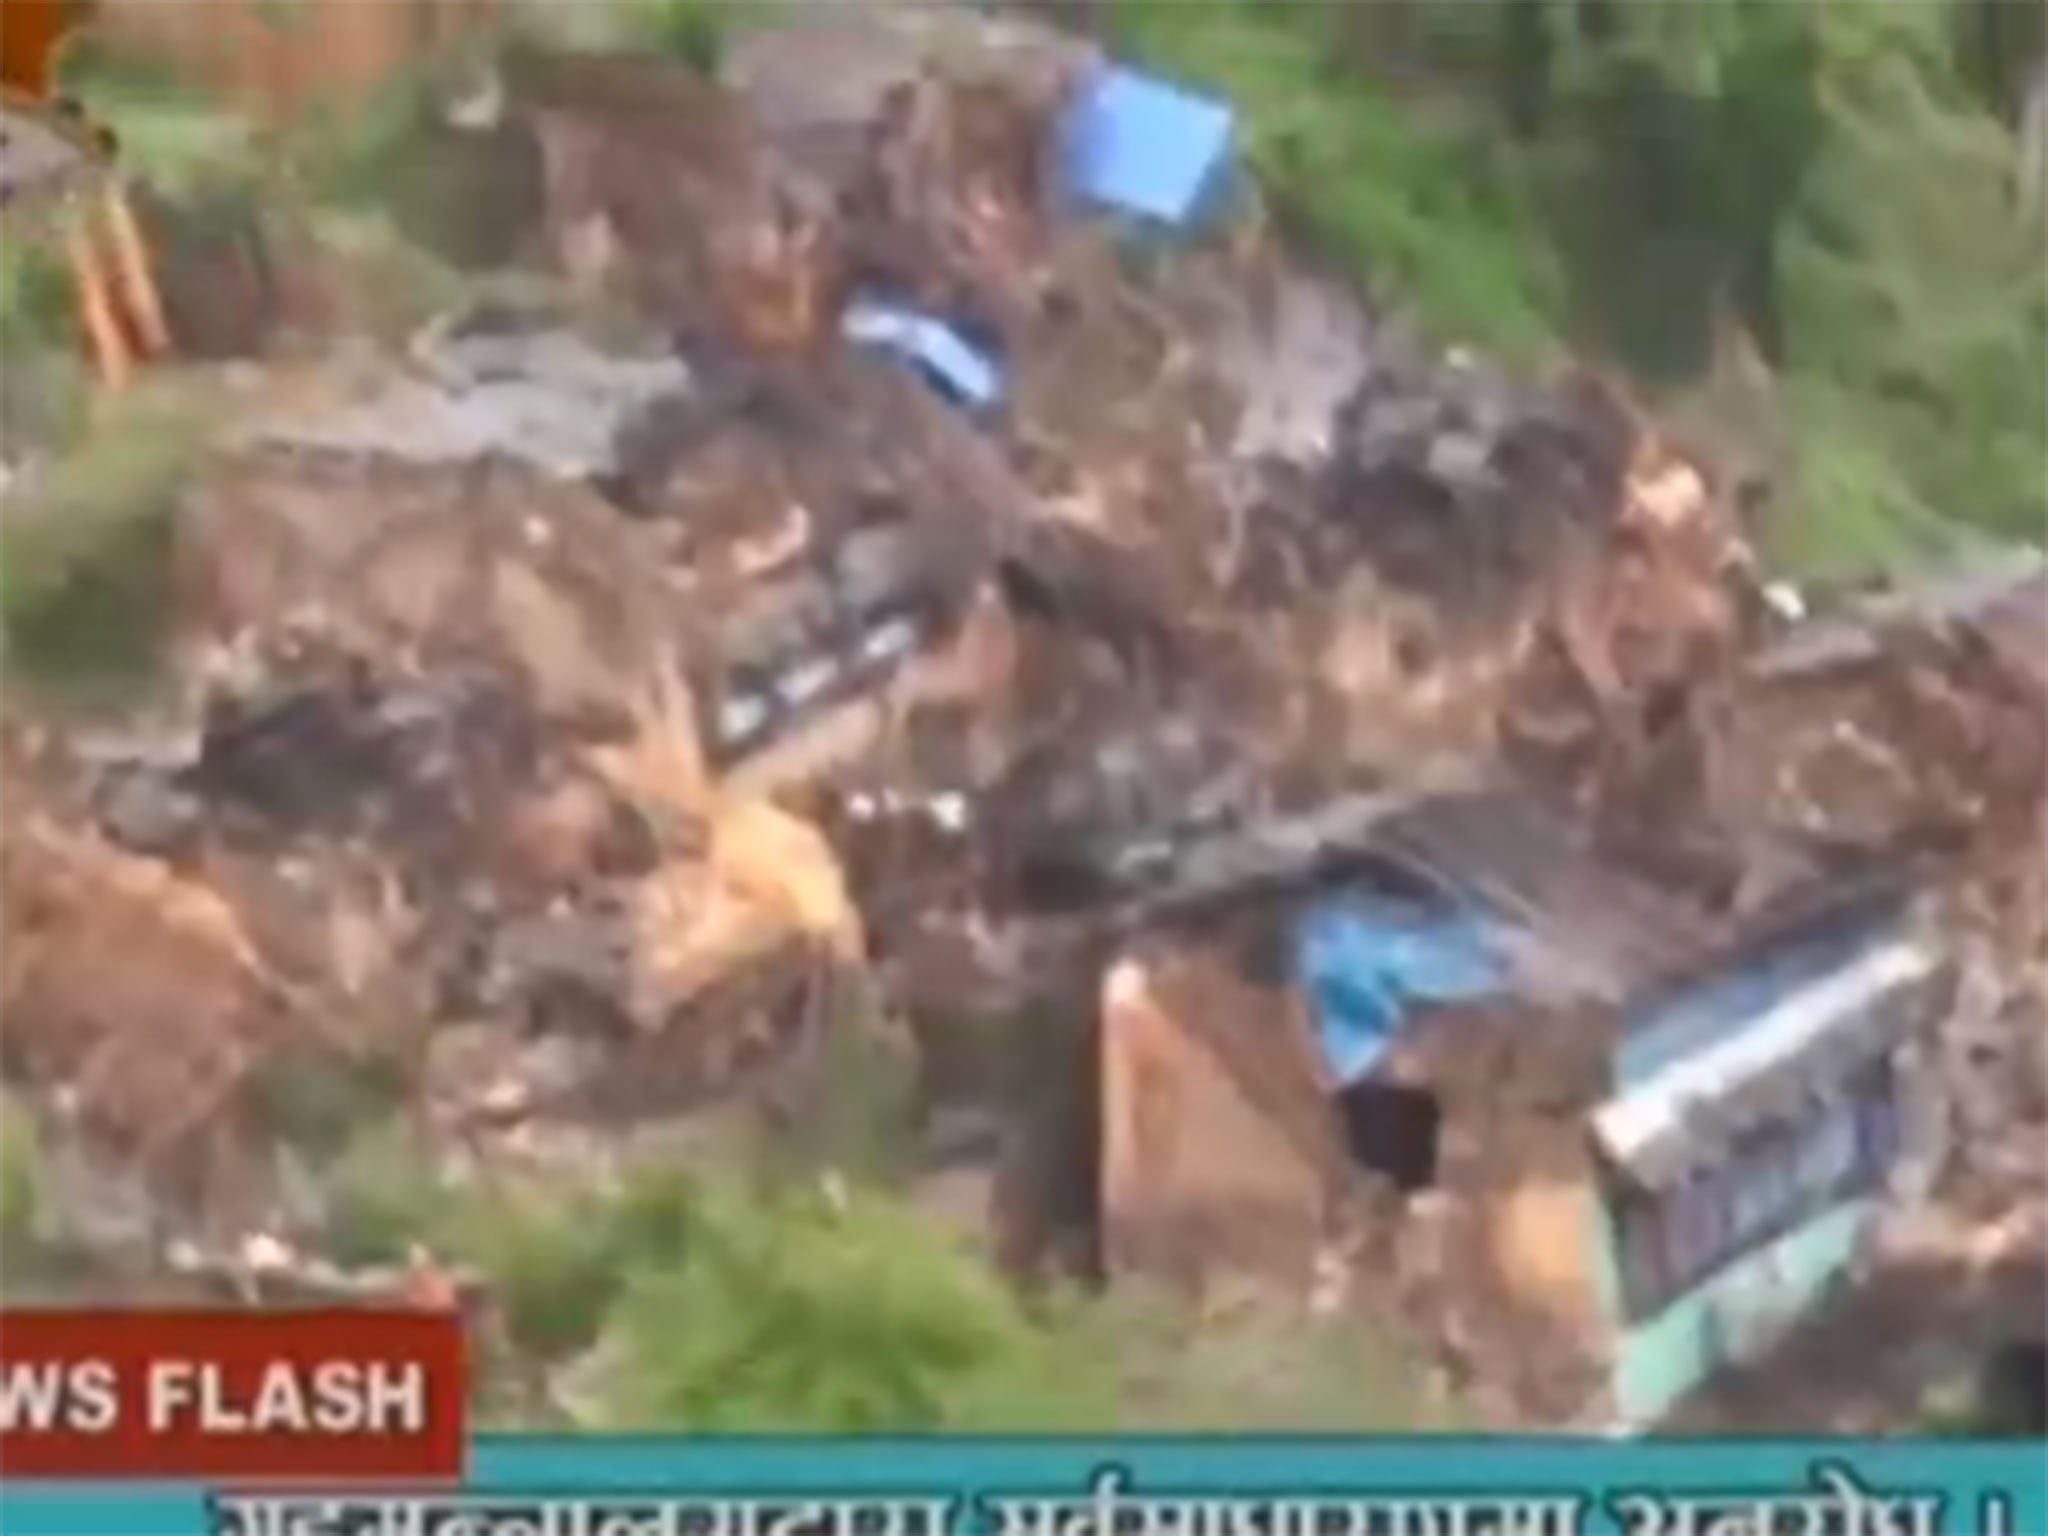 The earthquake wreaked havoc in Nepal's capital